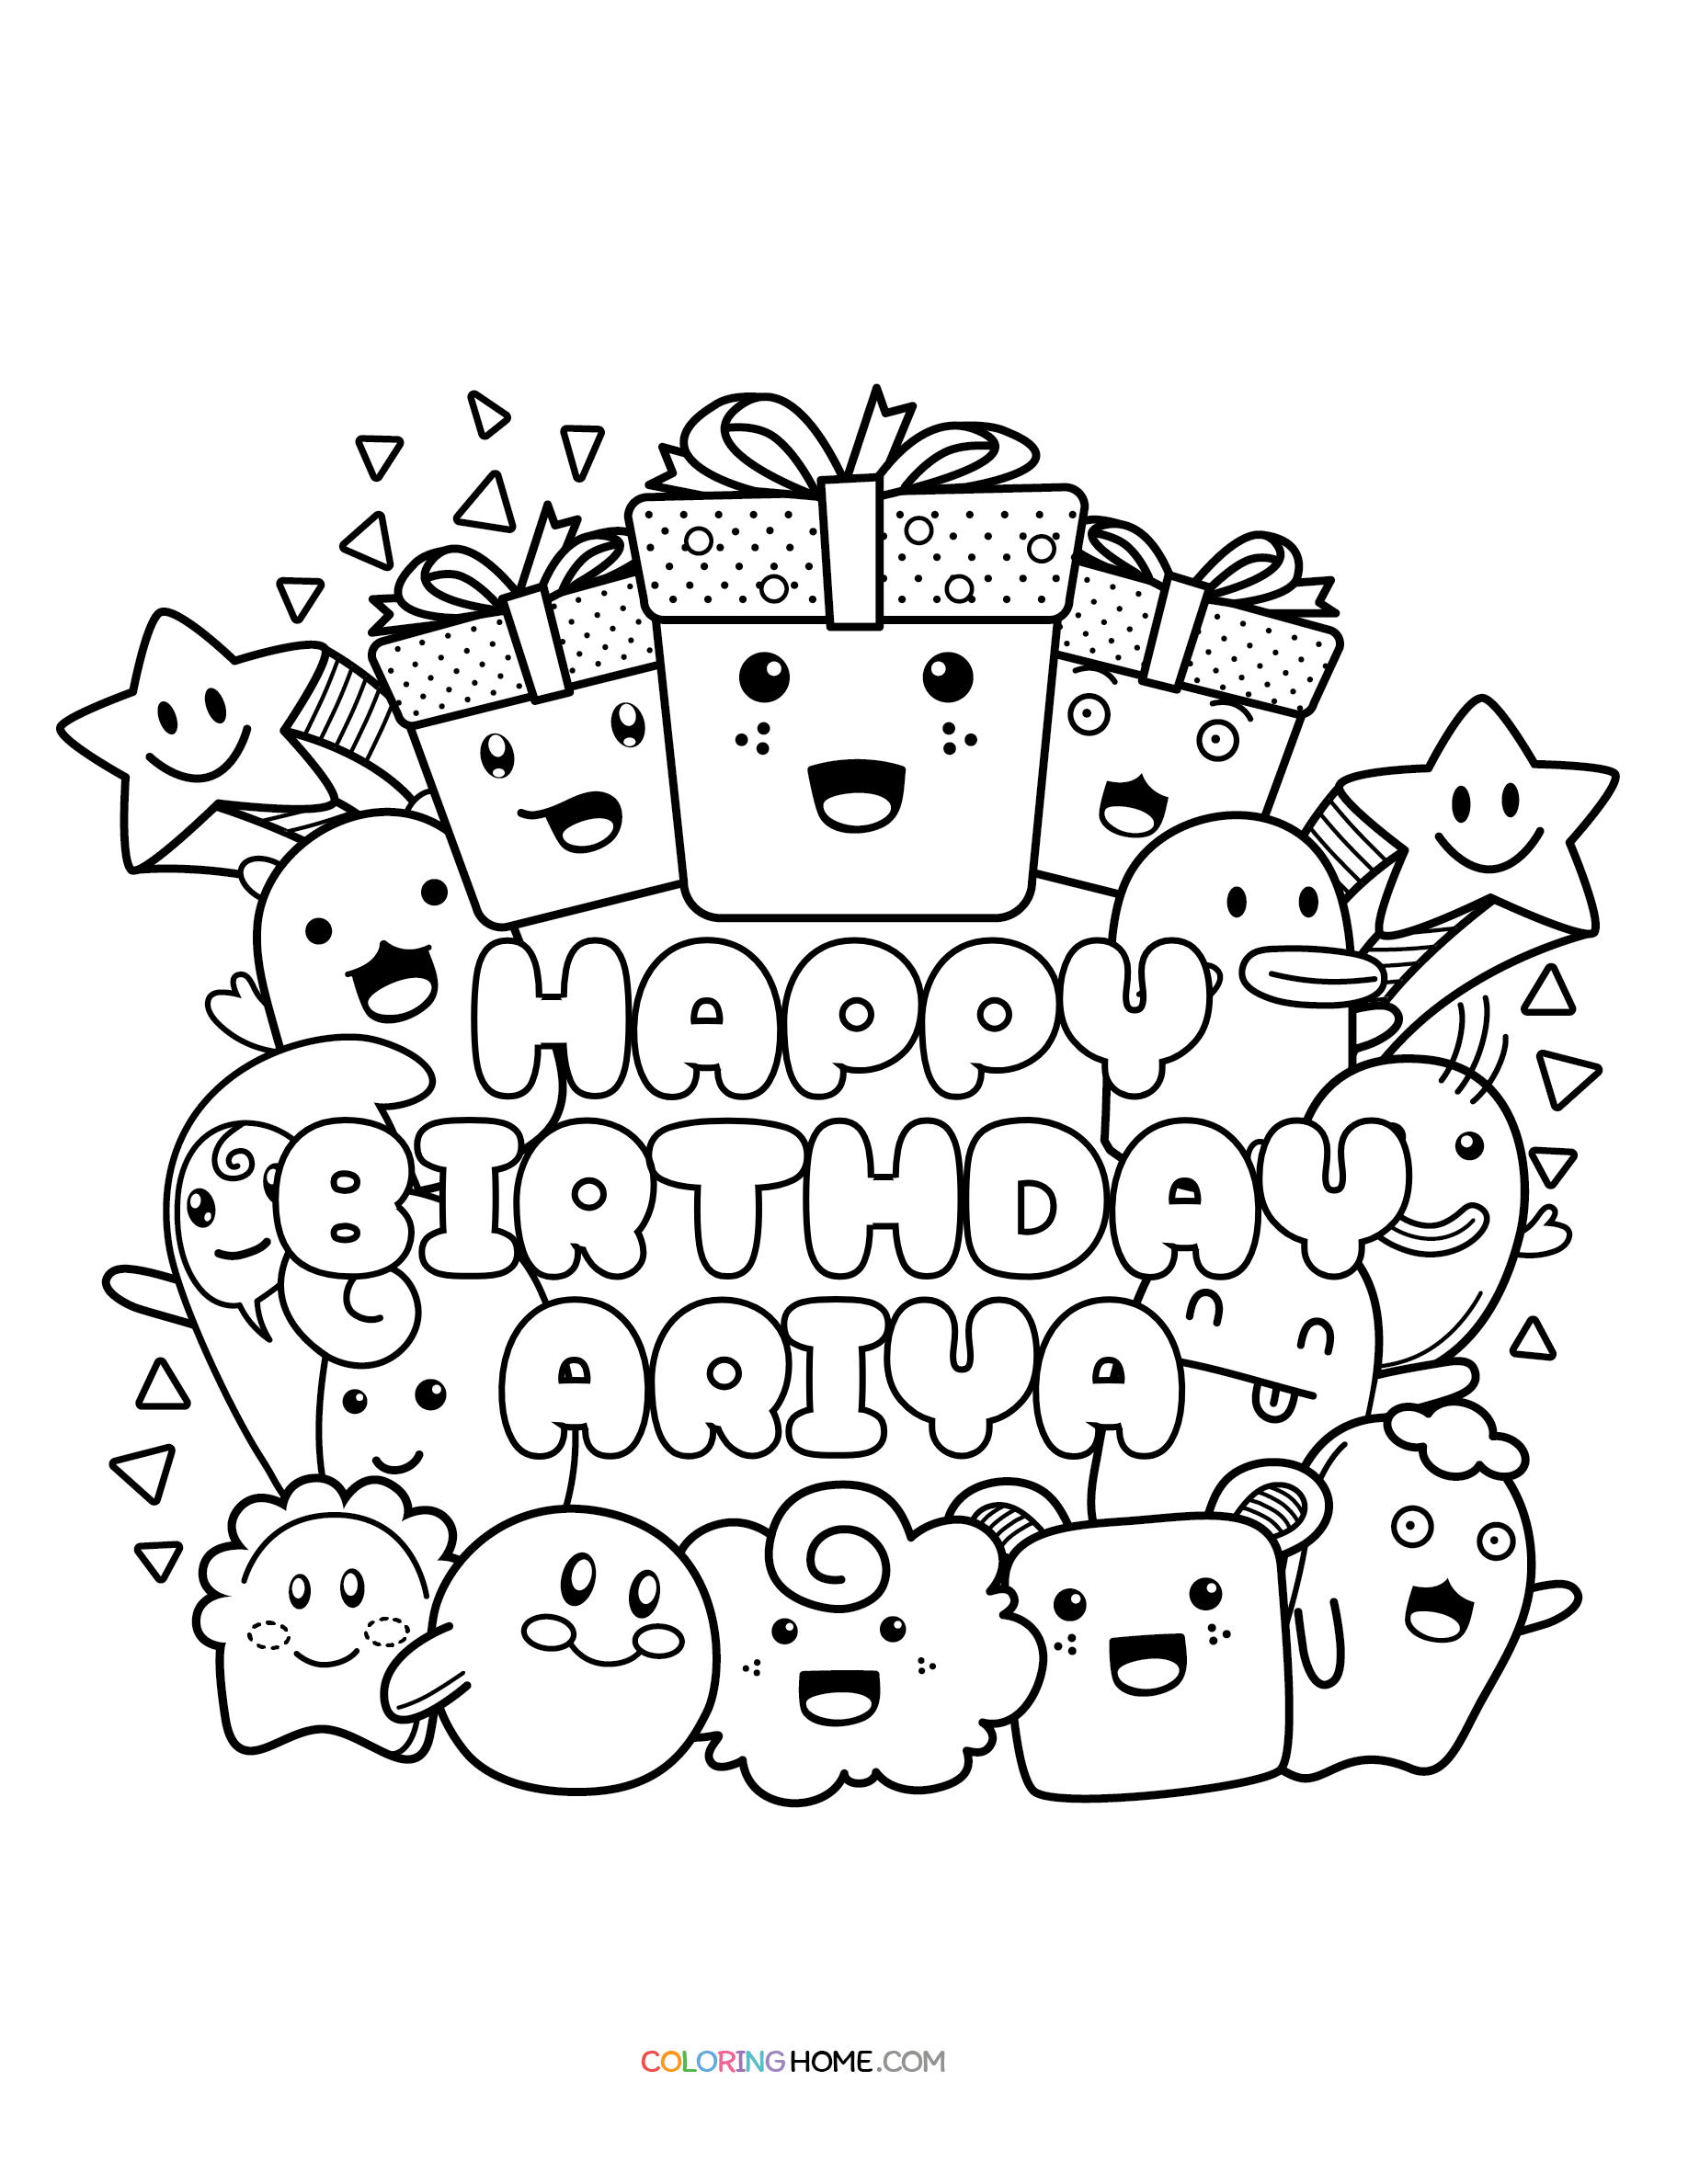 Happy Birthday Ariya coloring page